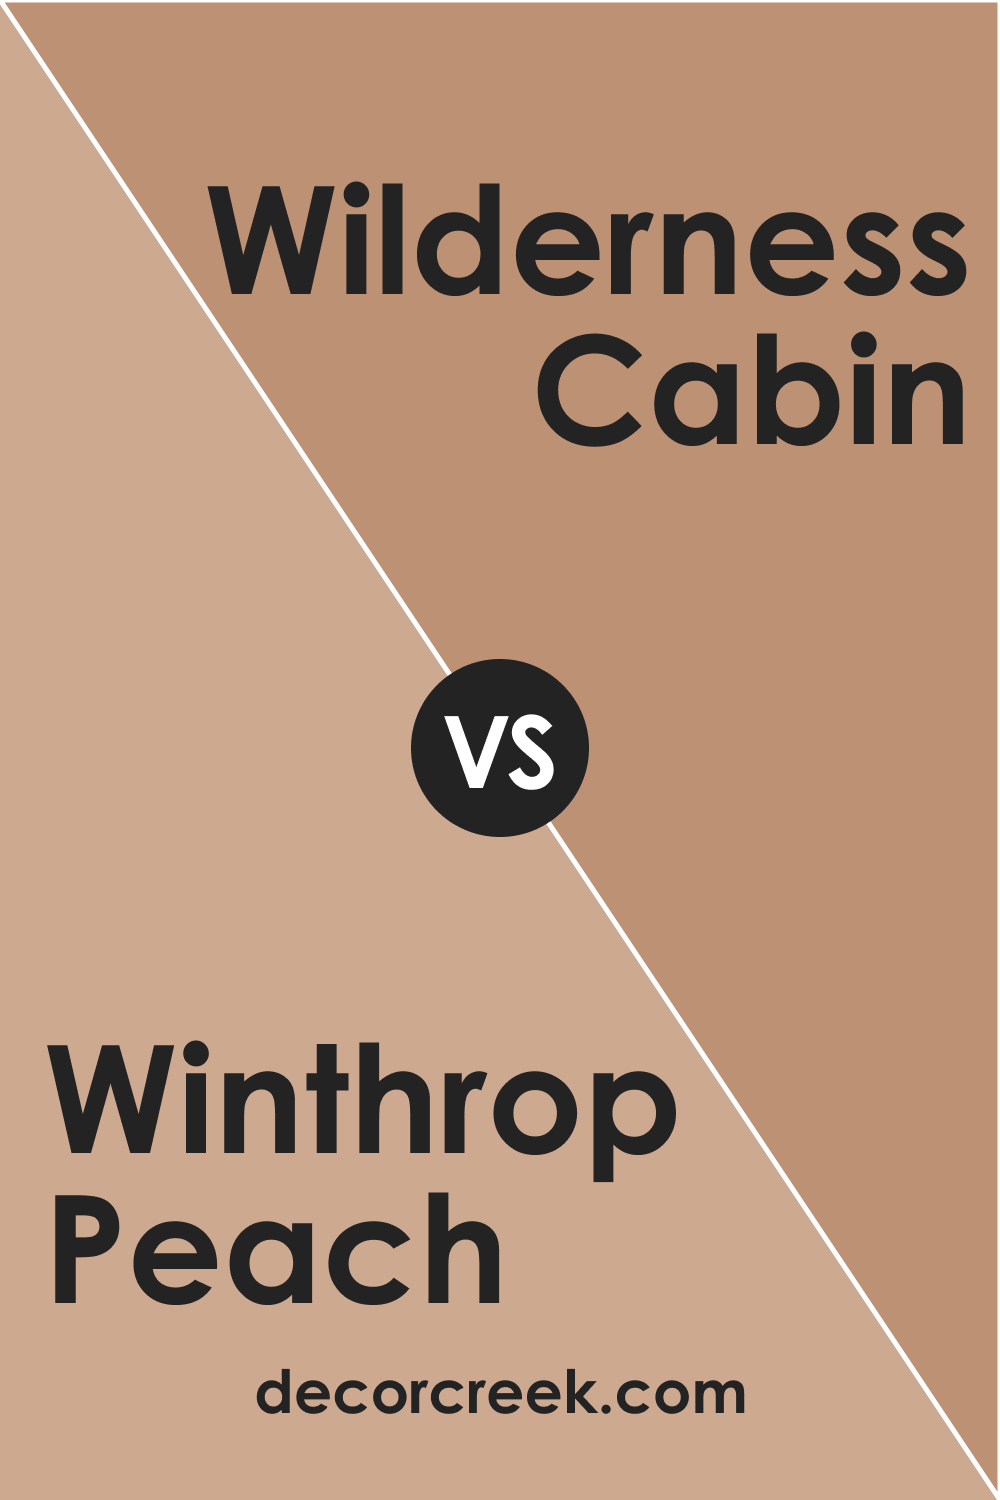 Winthrop Peach HC-55 vs. BM 1168 Wilderness Cabin